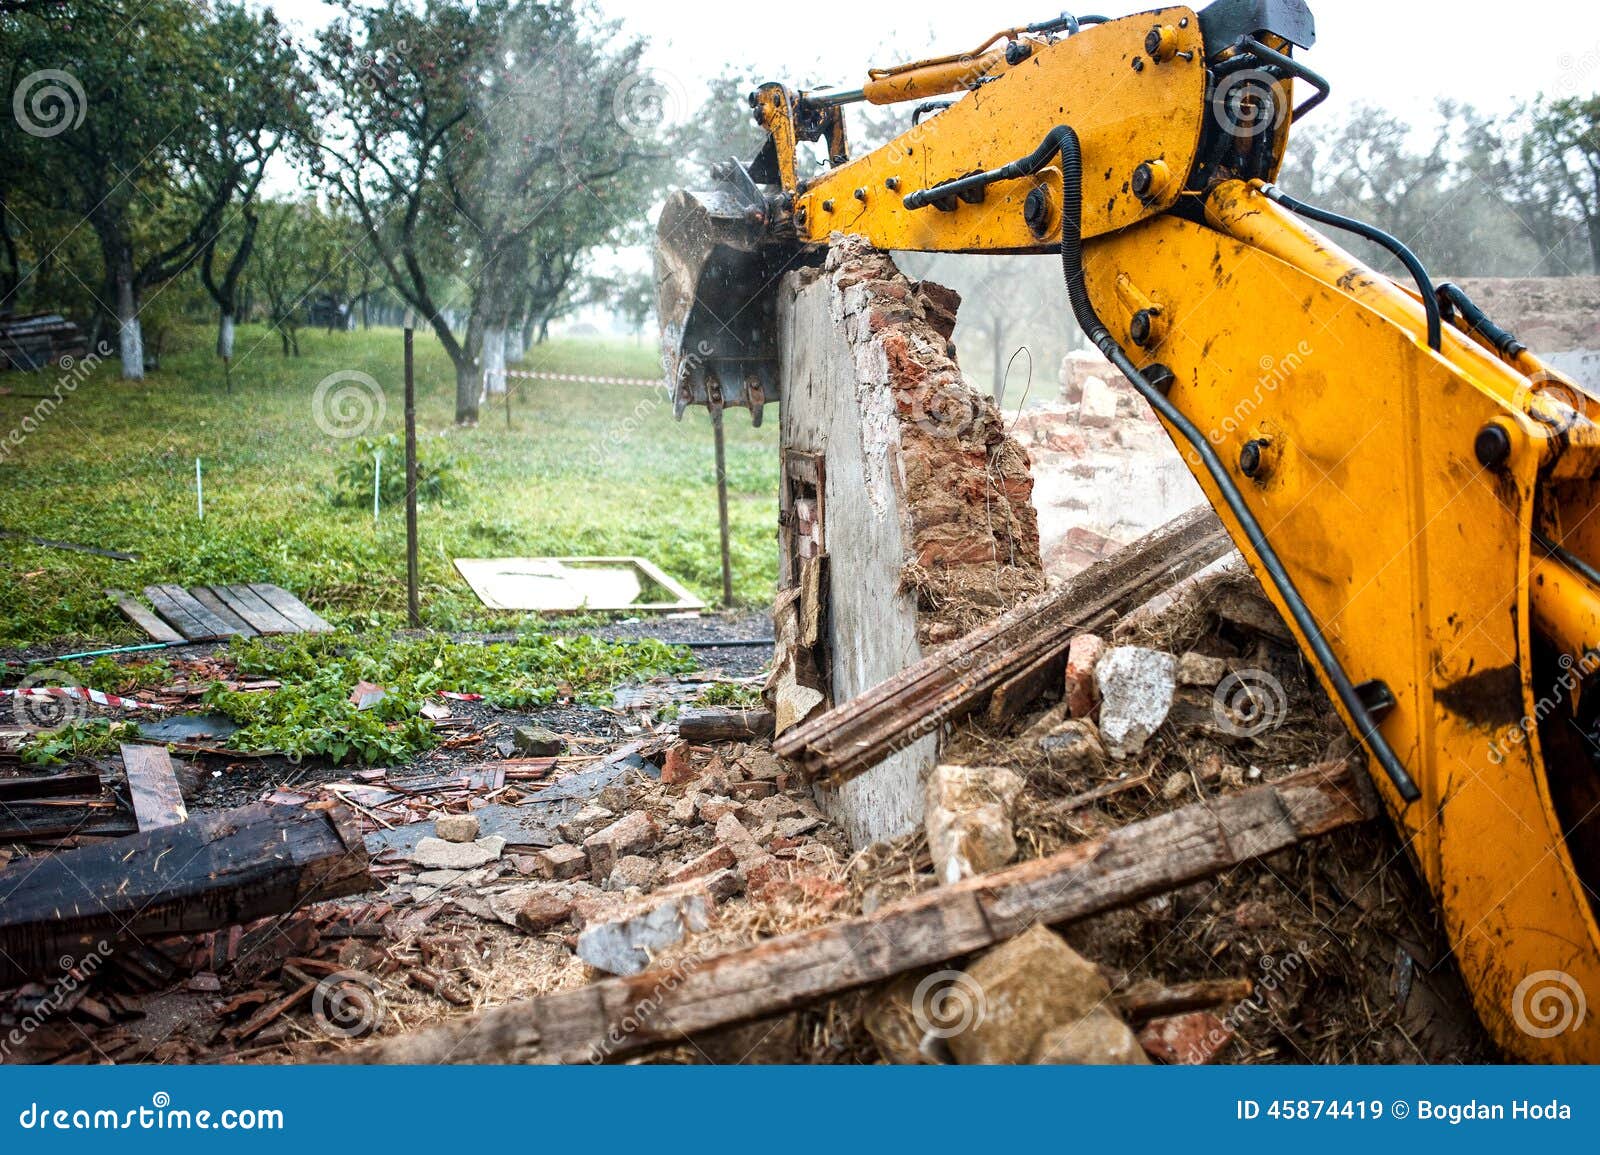 excavator demolishing a concrete wall